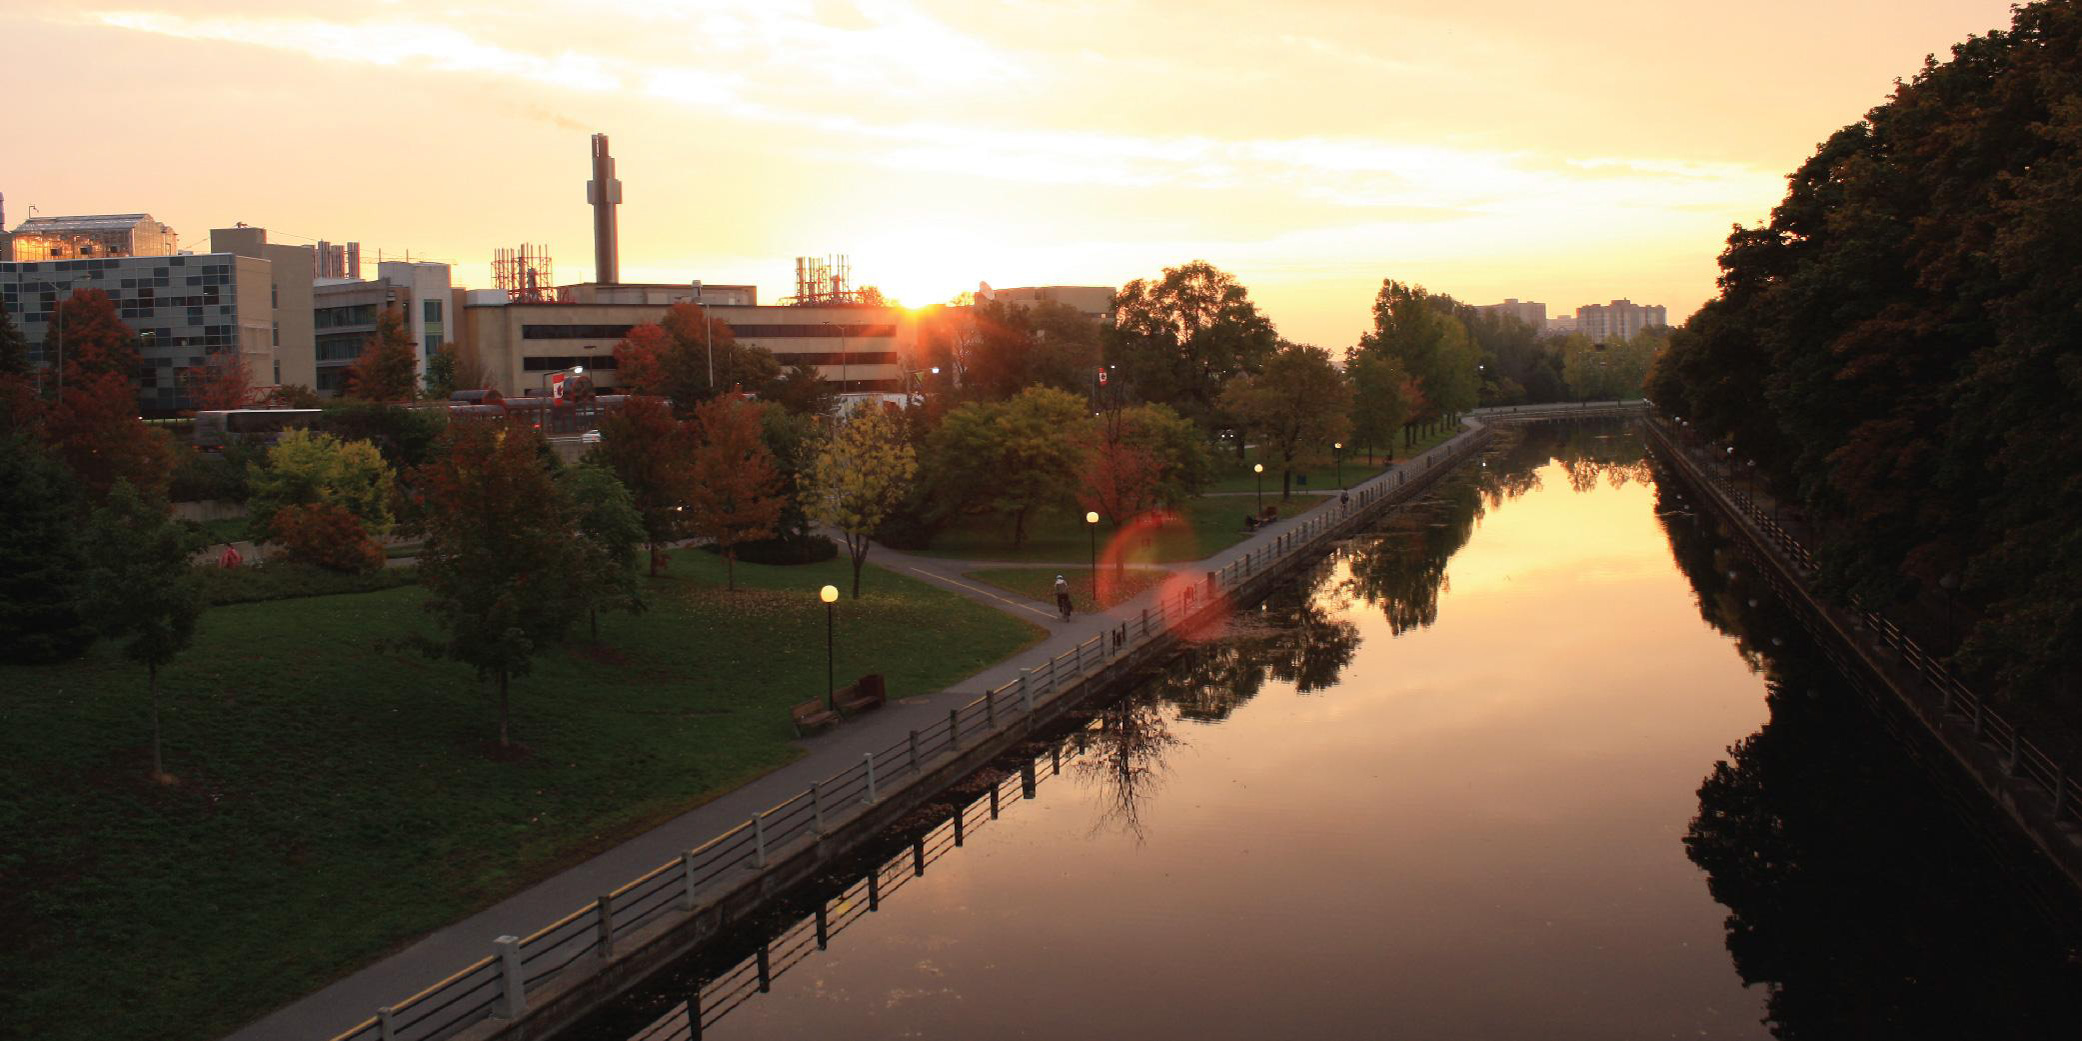 Sunset on the University of Ottawa campus